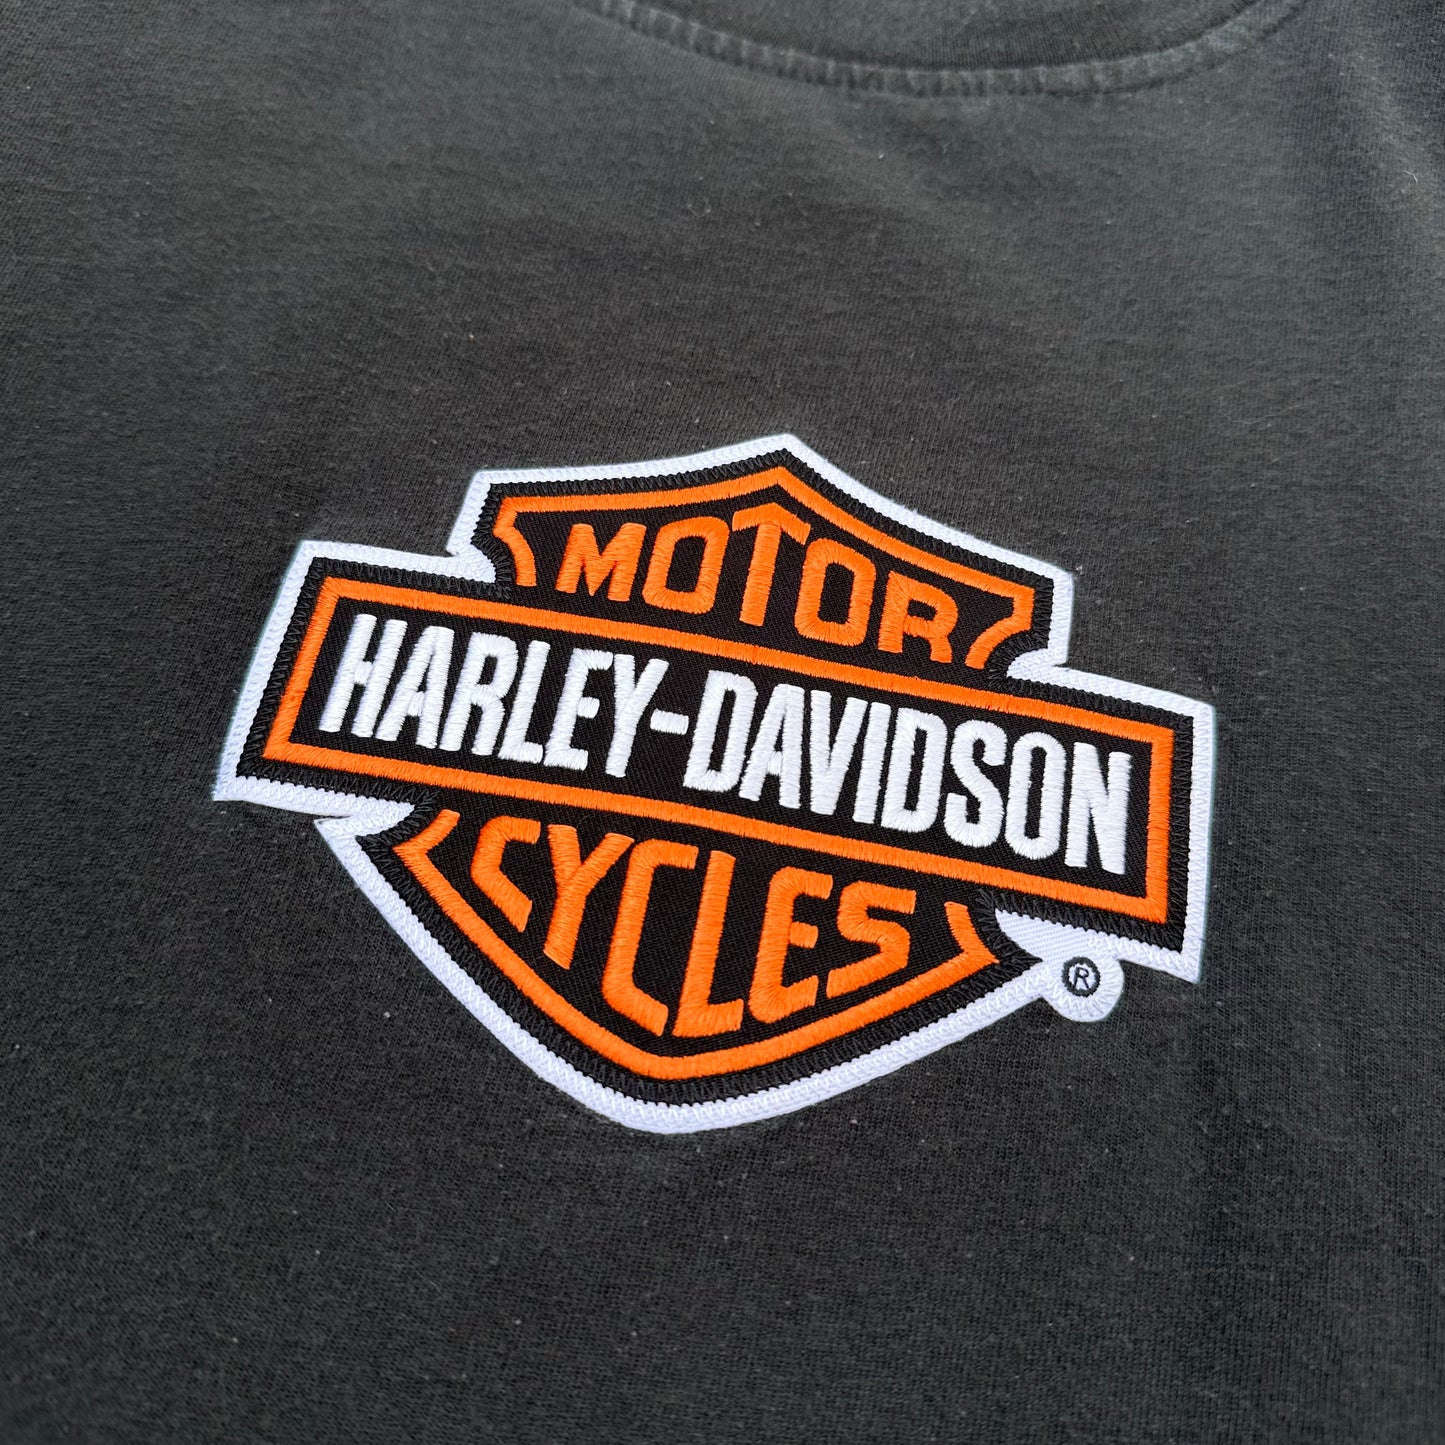 Harley Davidson Mile High Colorado Long Sleeve Shirt - L